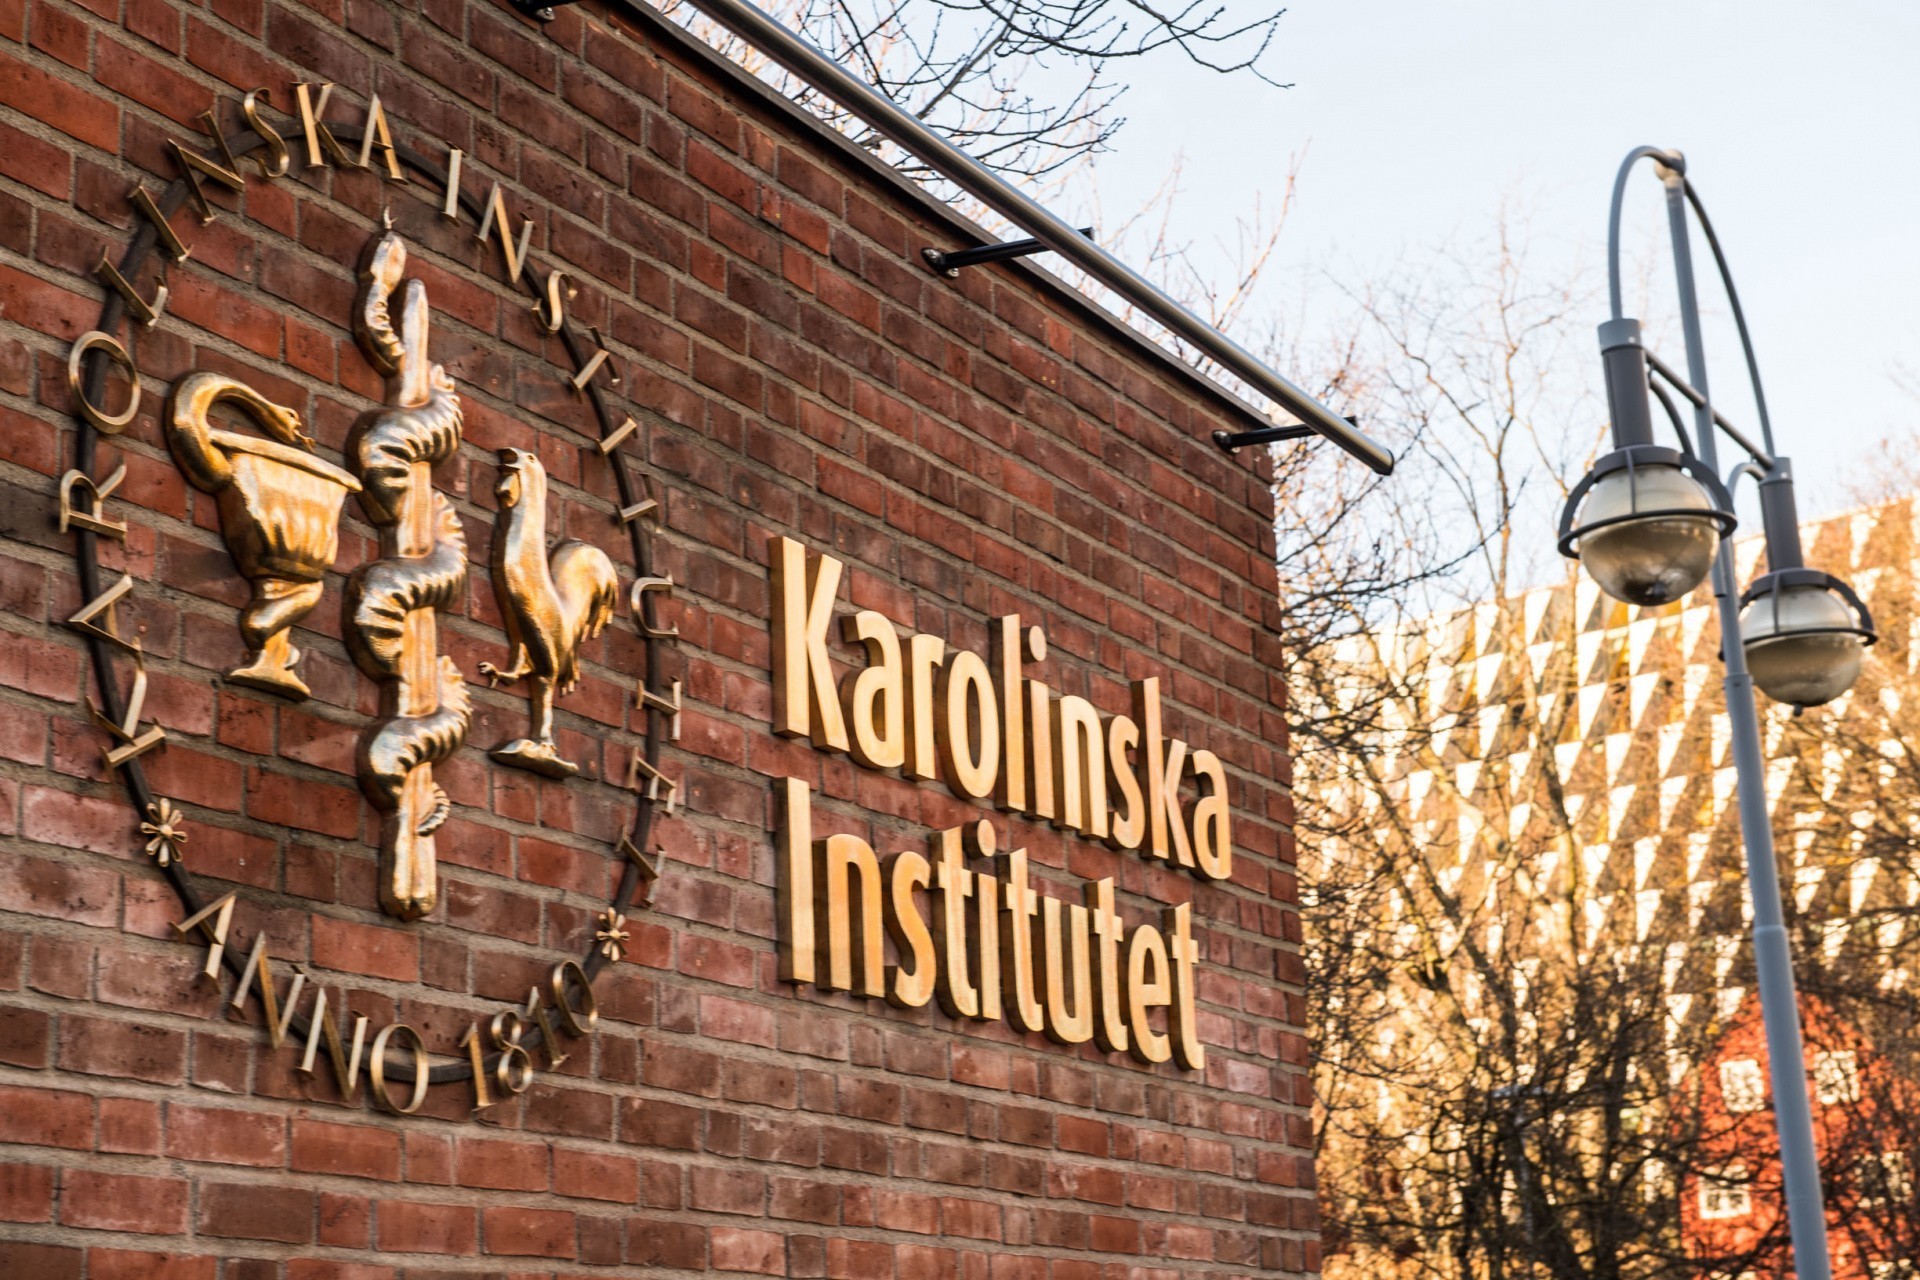 Global-MSc-Scholarships-at-Karolinska-Institute-in-Sweden-2019.jpg